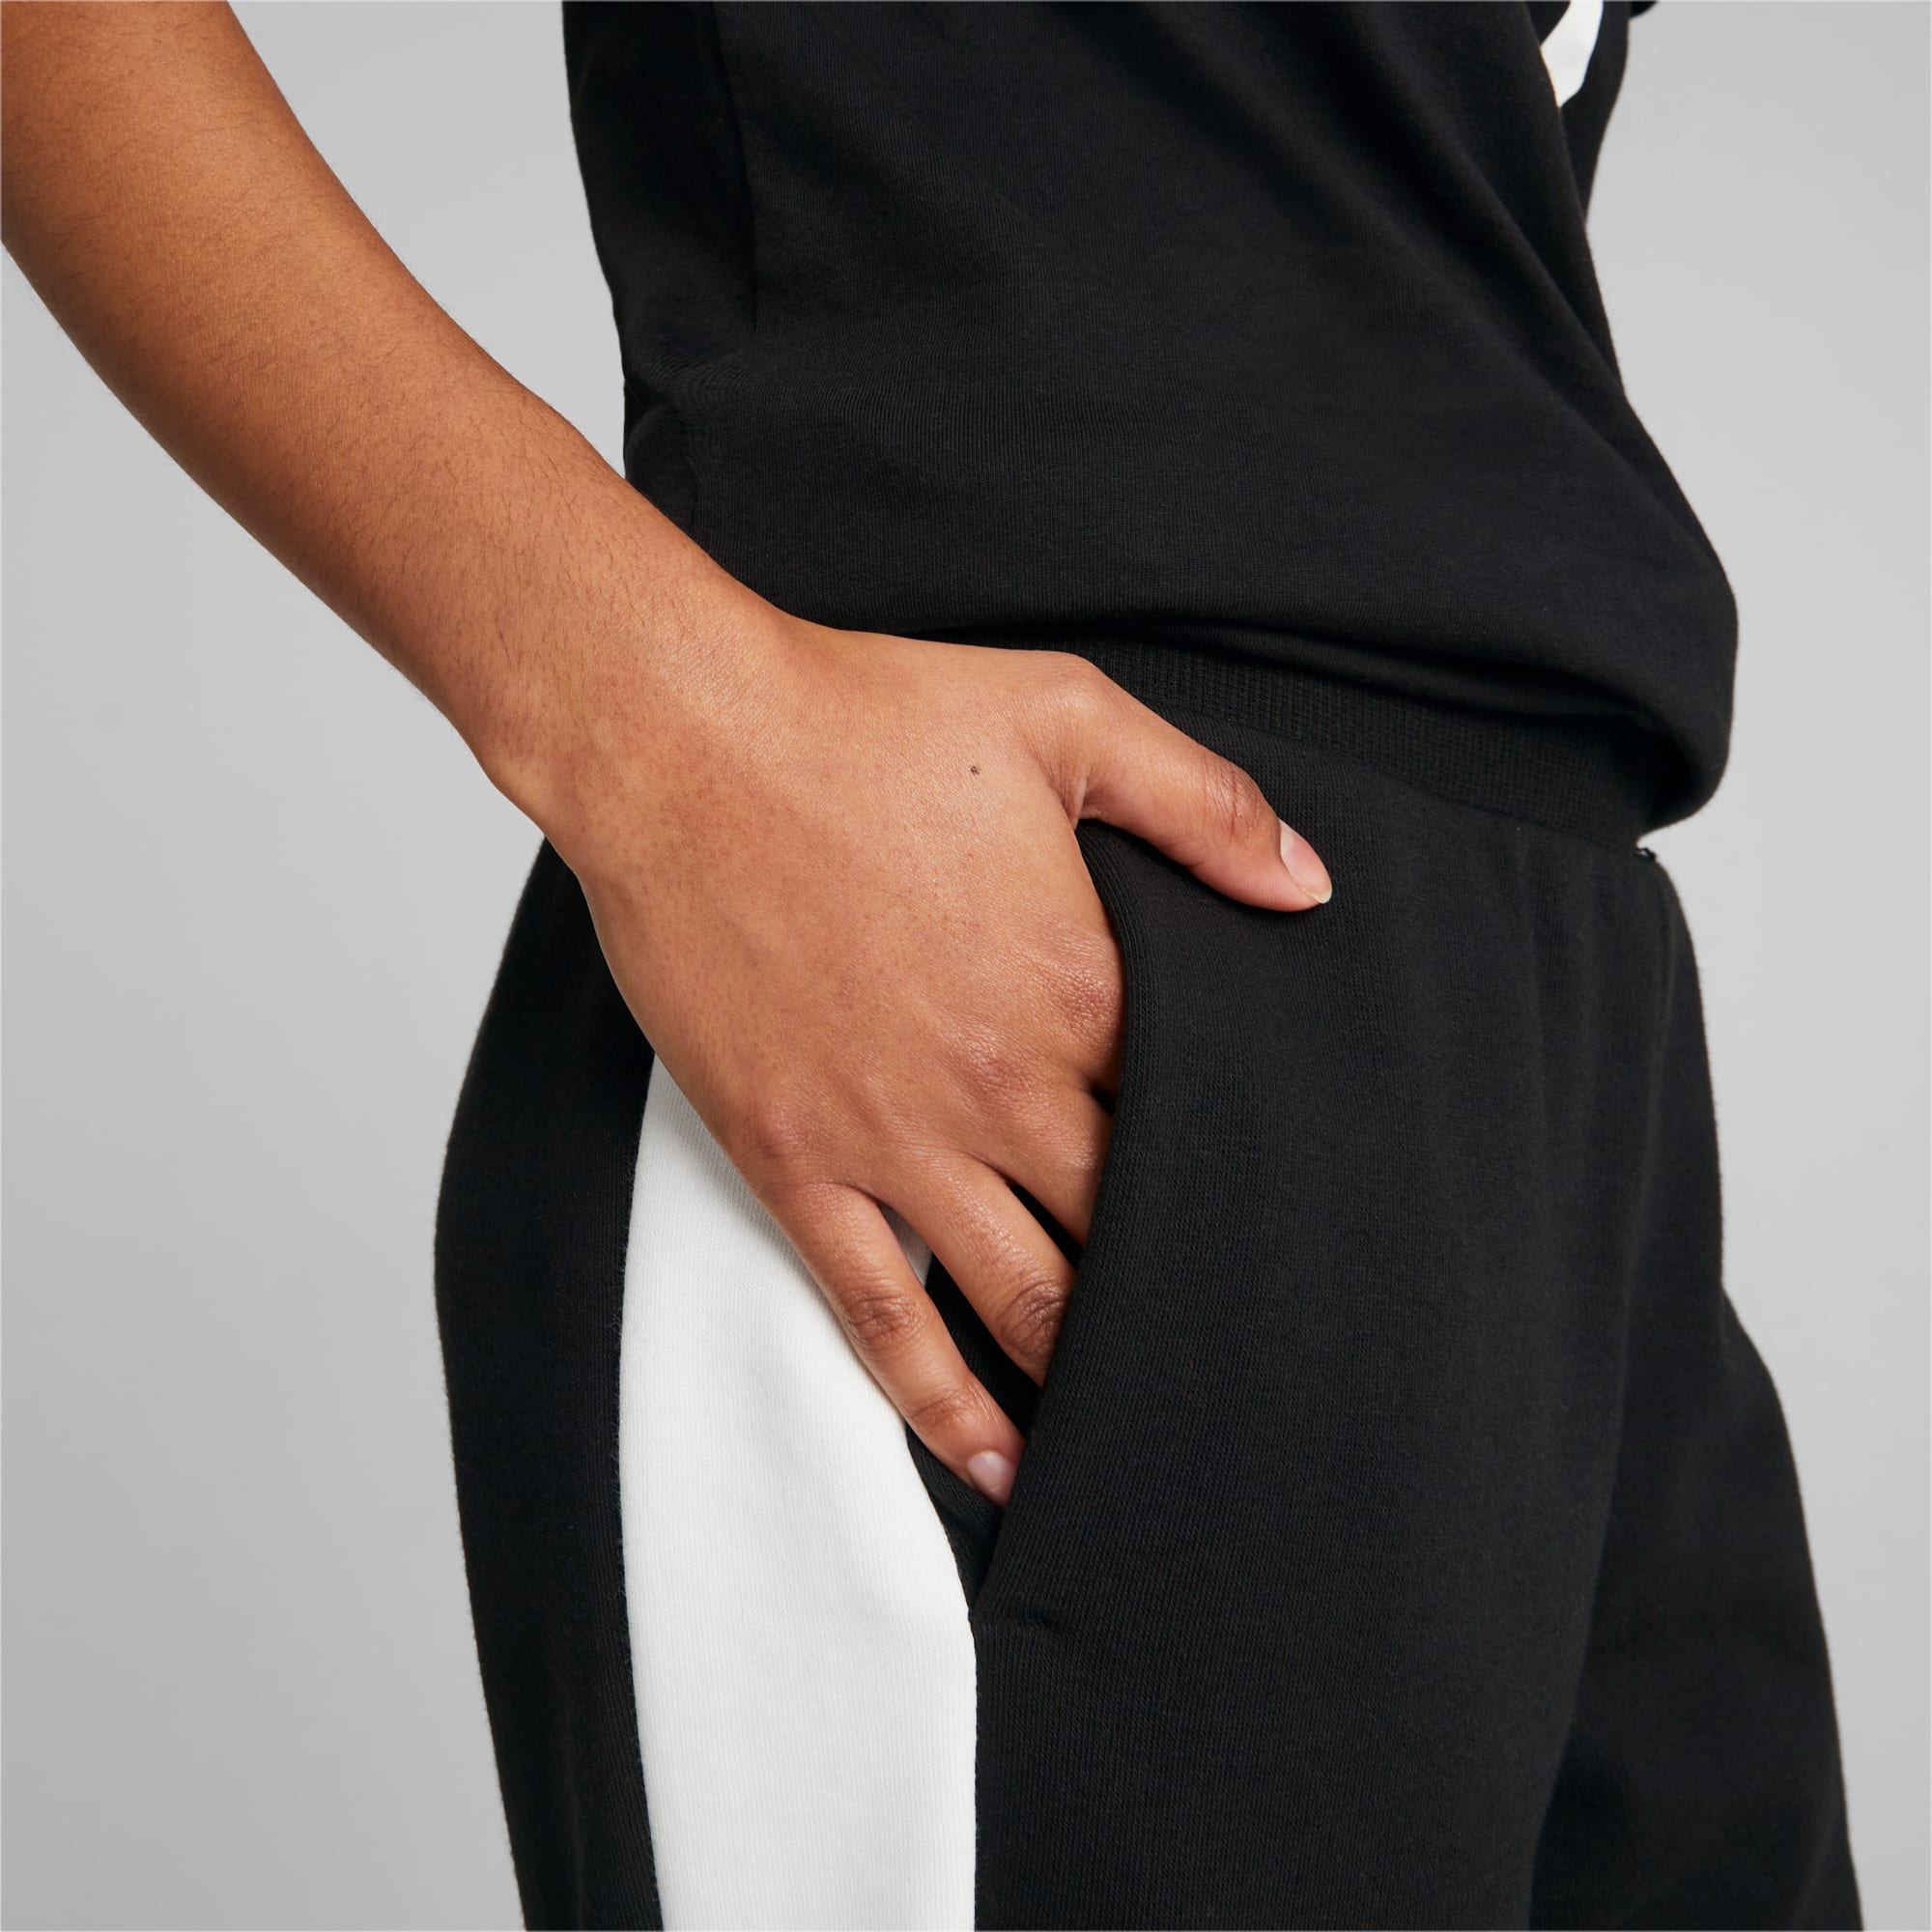 Puma Women's T7 High Waist Pants - Black (535714-01) · Slide Culture